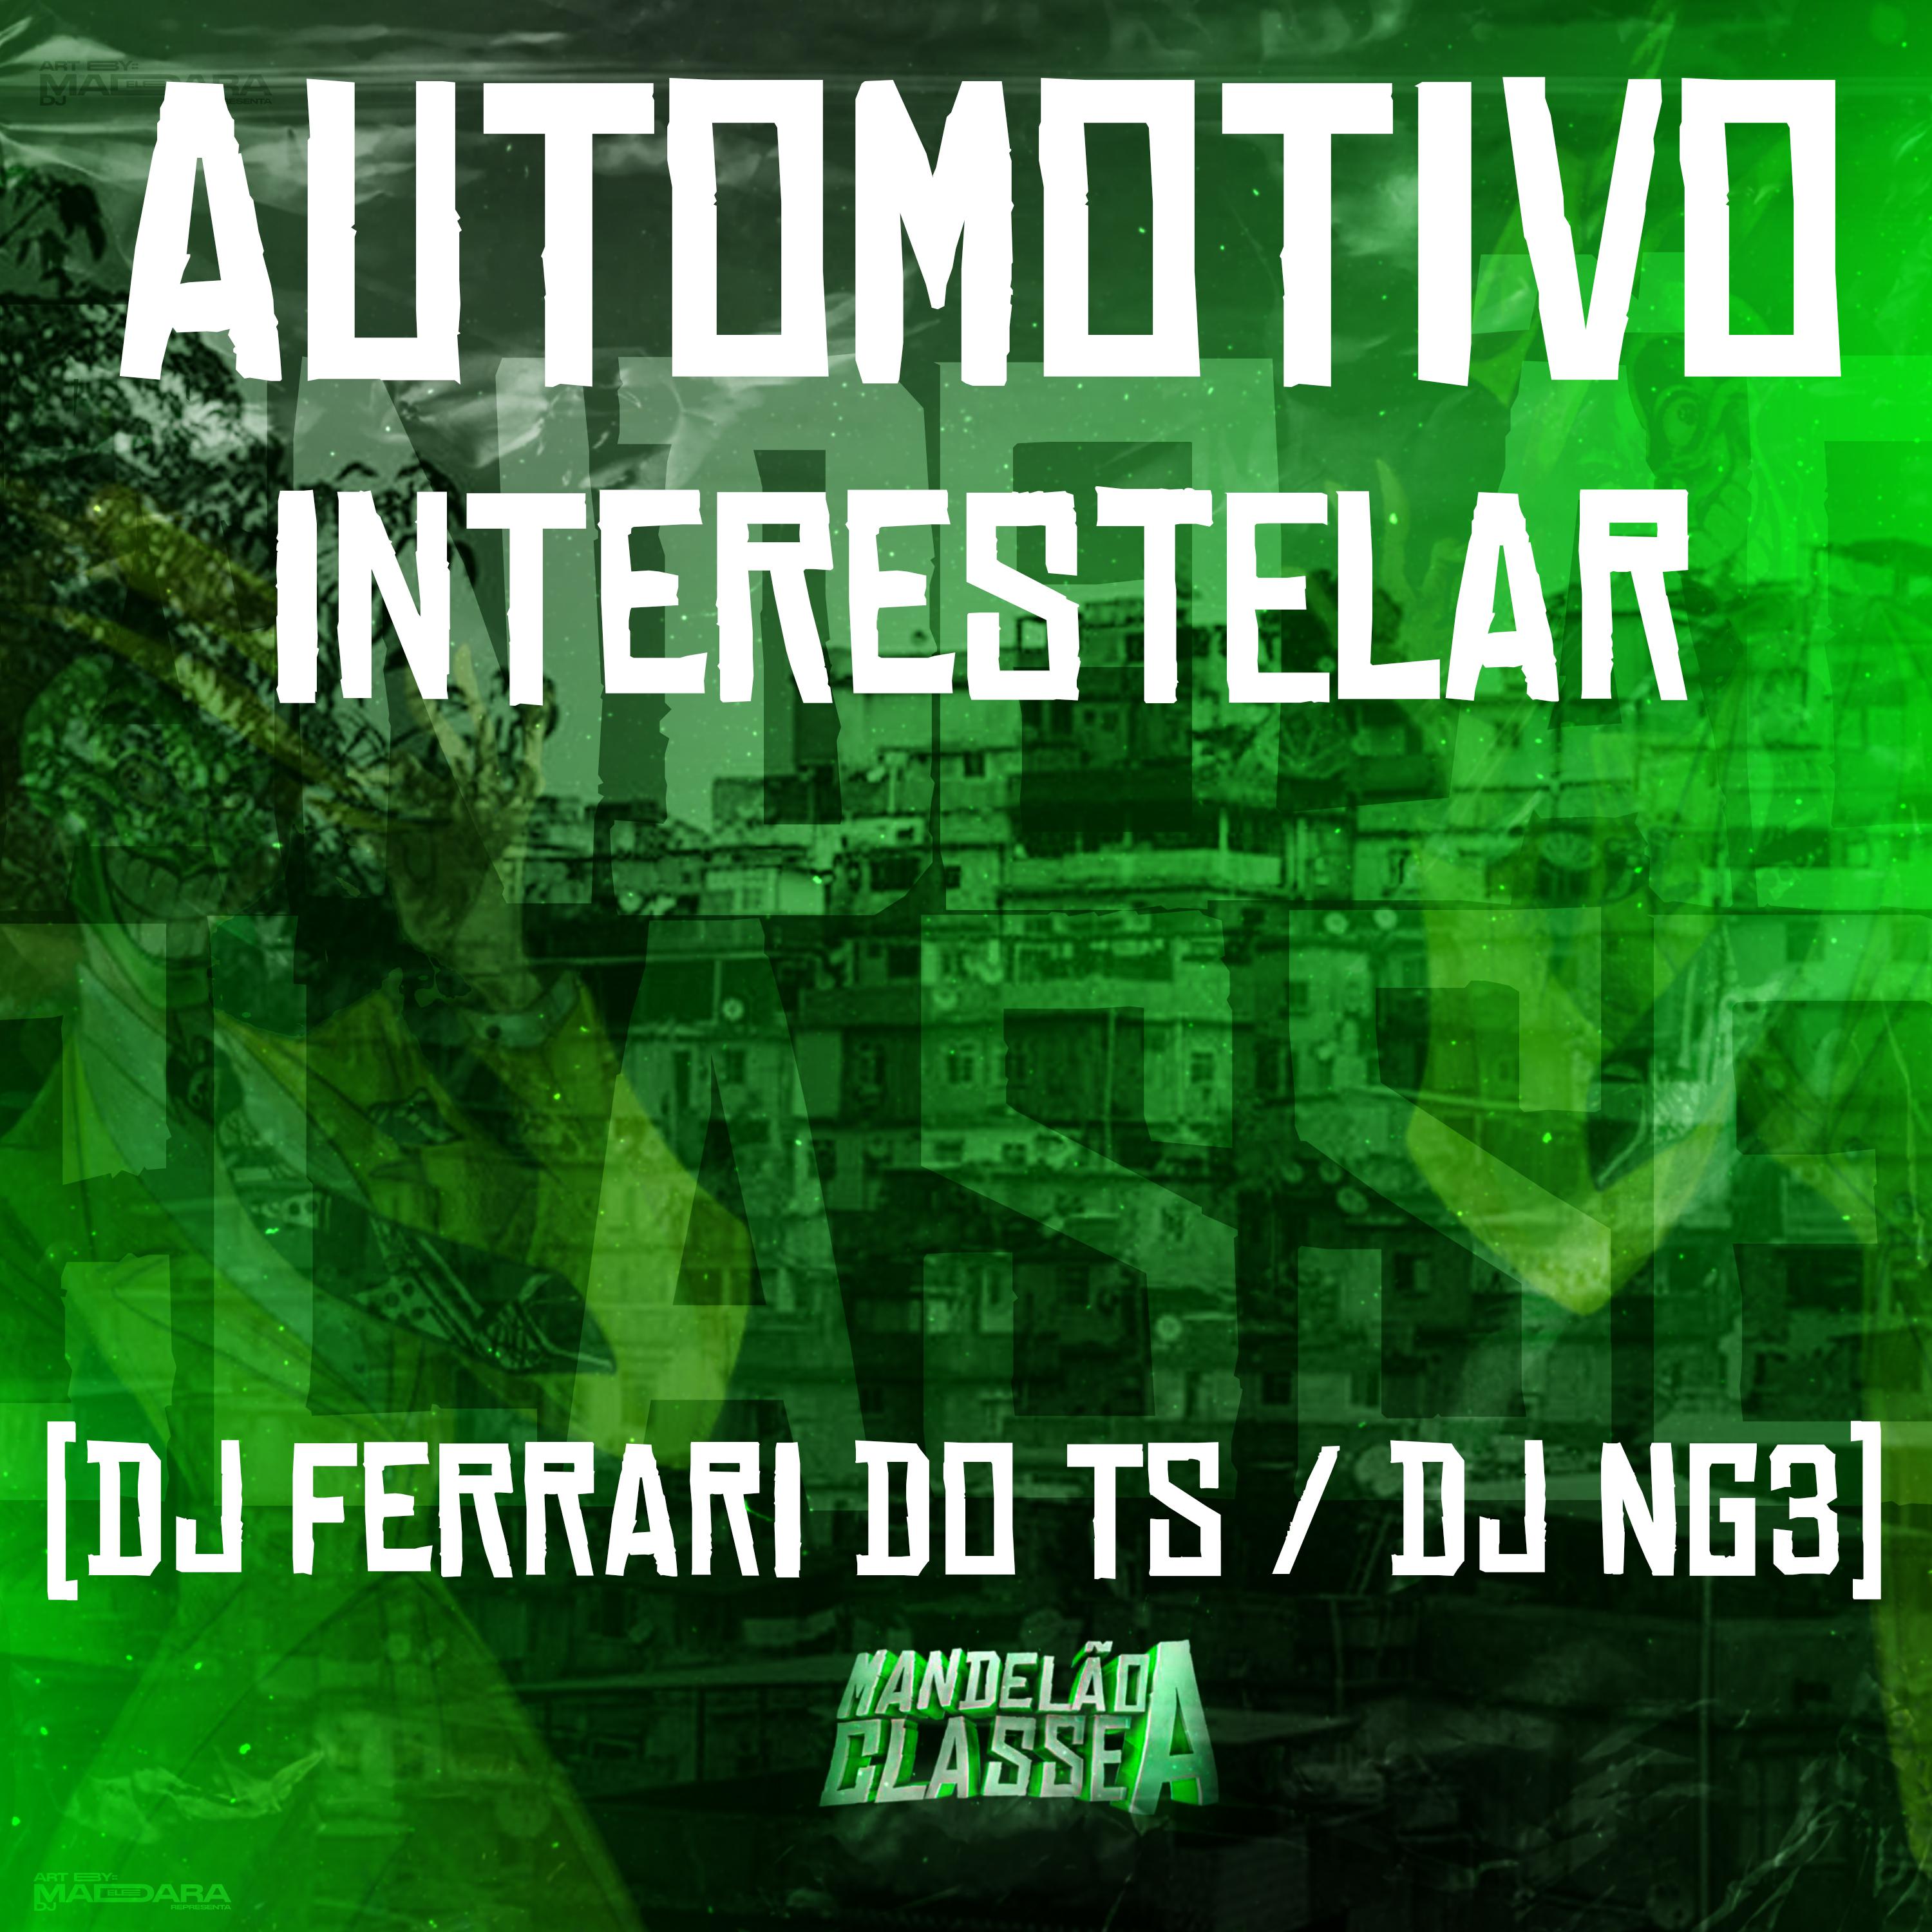 DJ NG3 - Automotivo Interestelar